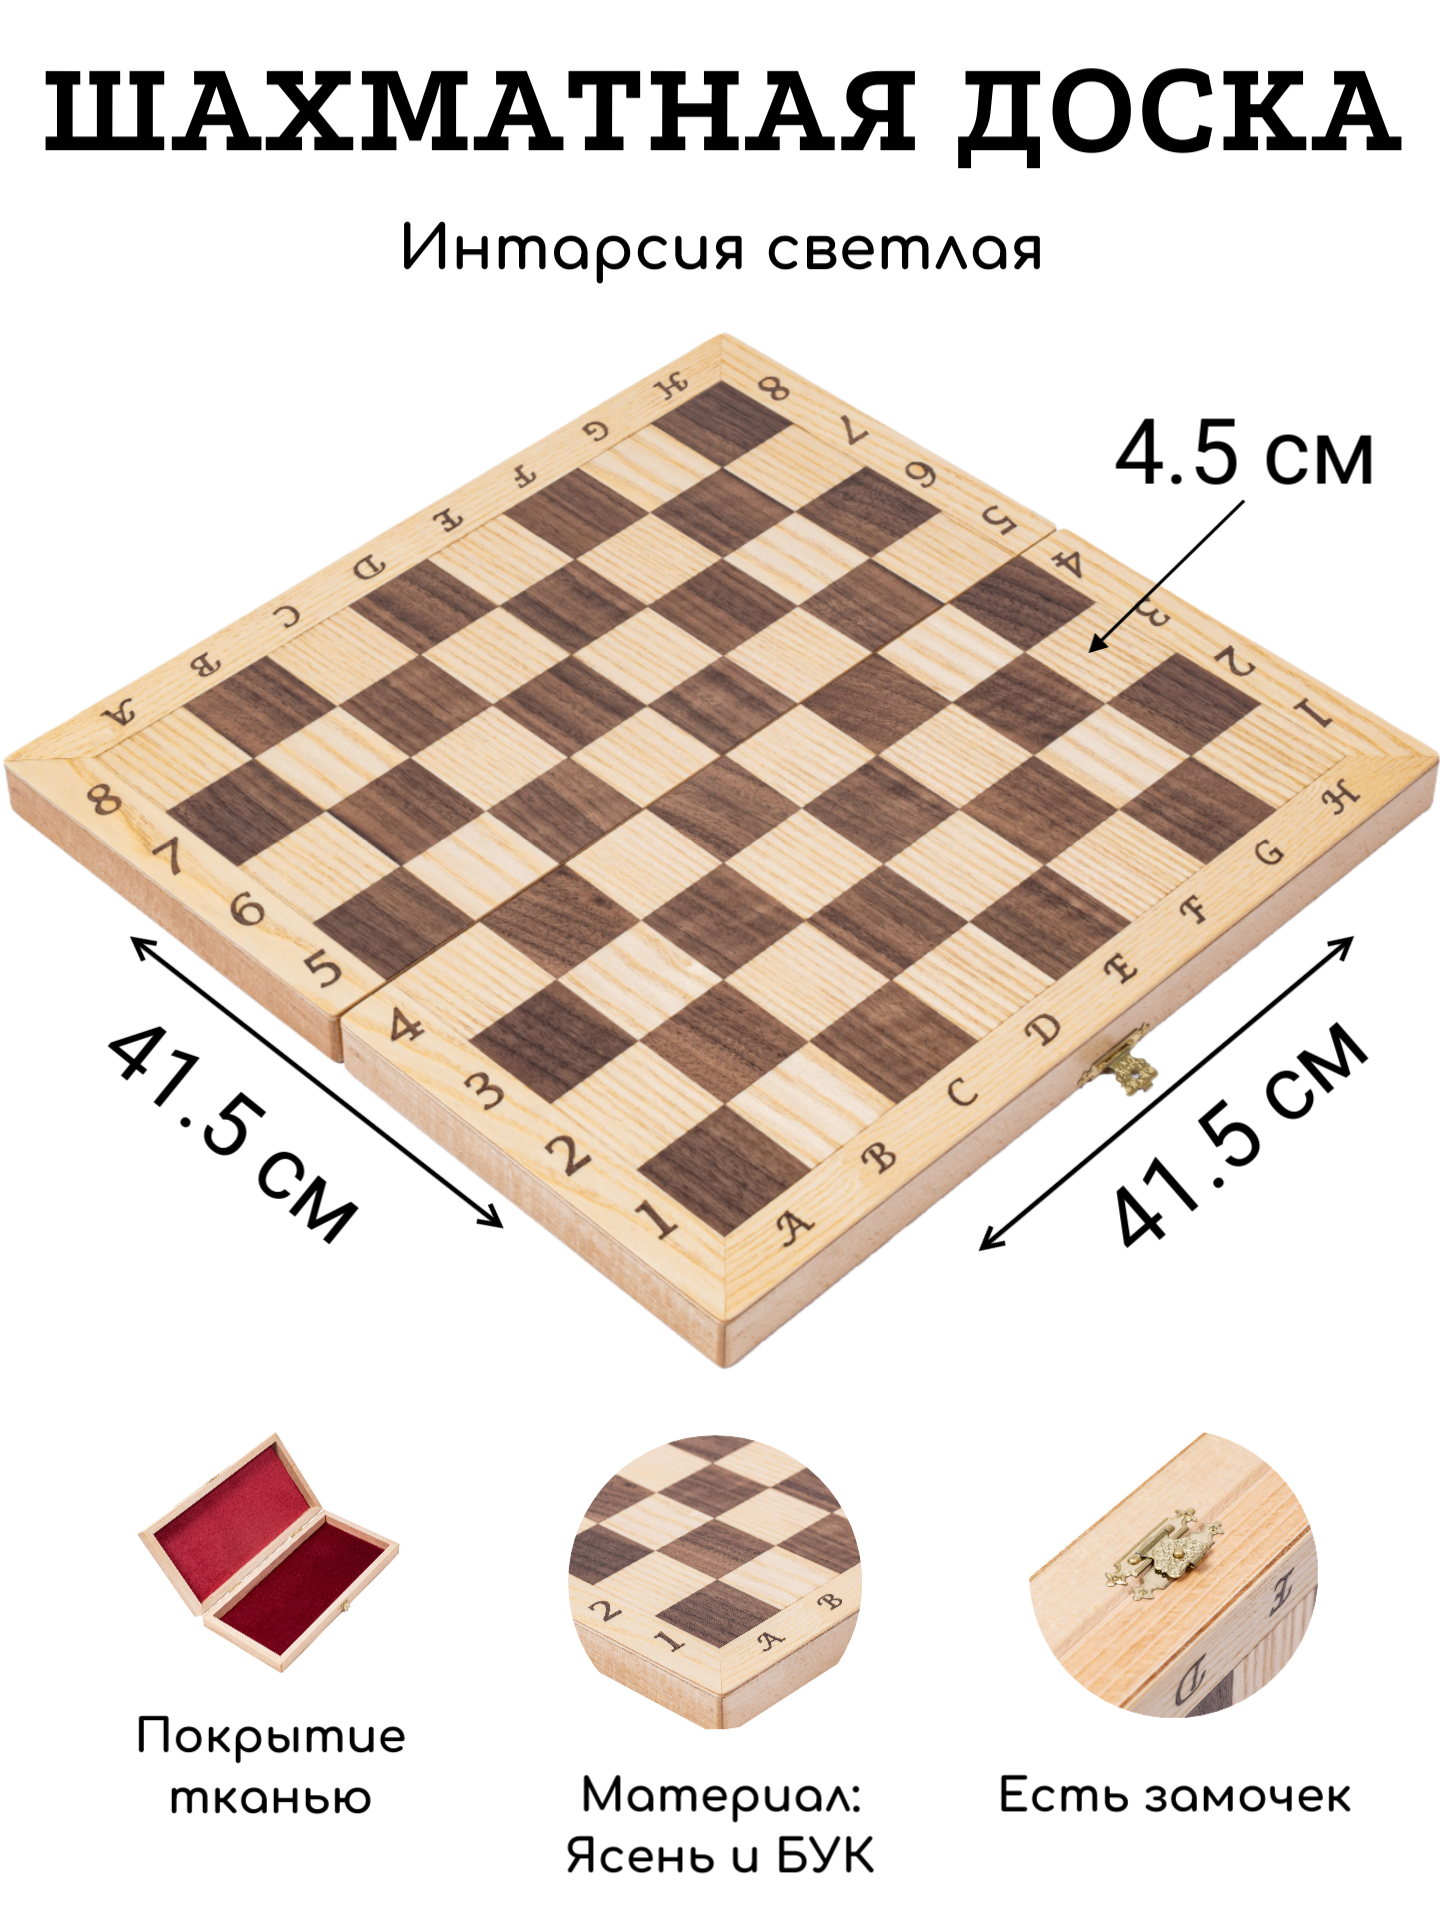 Шахматная доска без фигур Lavochkashop Турнирная 41 5 см интарсия stav042 шахматная доска обиходная 29 х 29 х 3 5 см